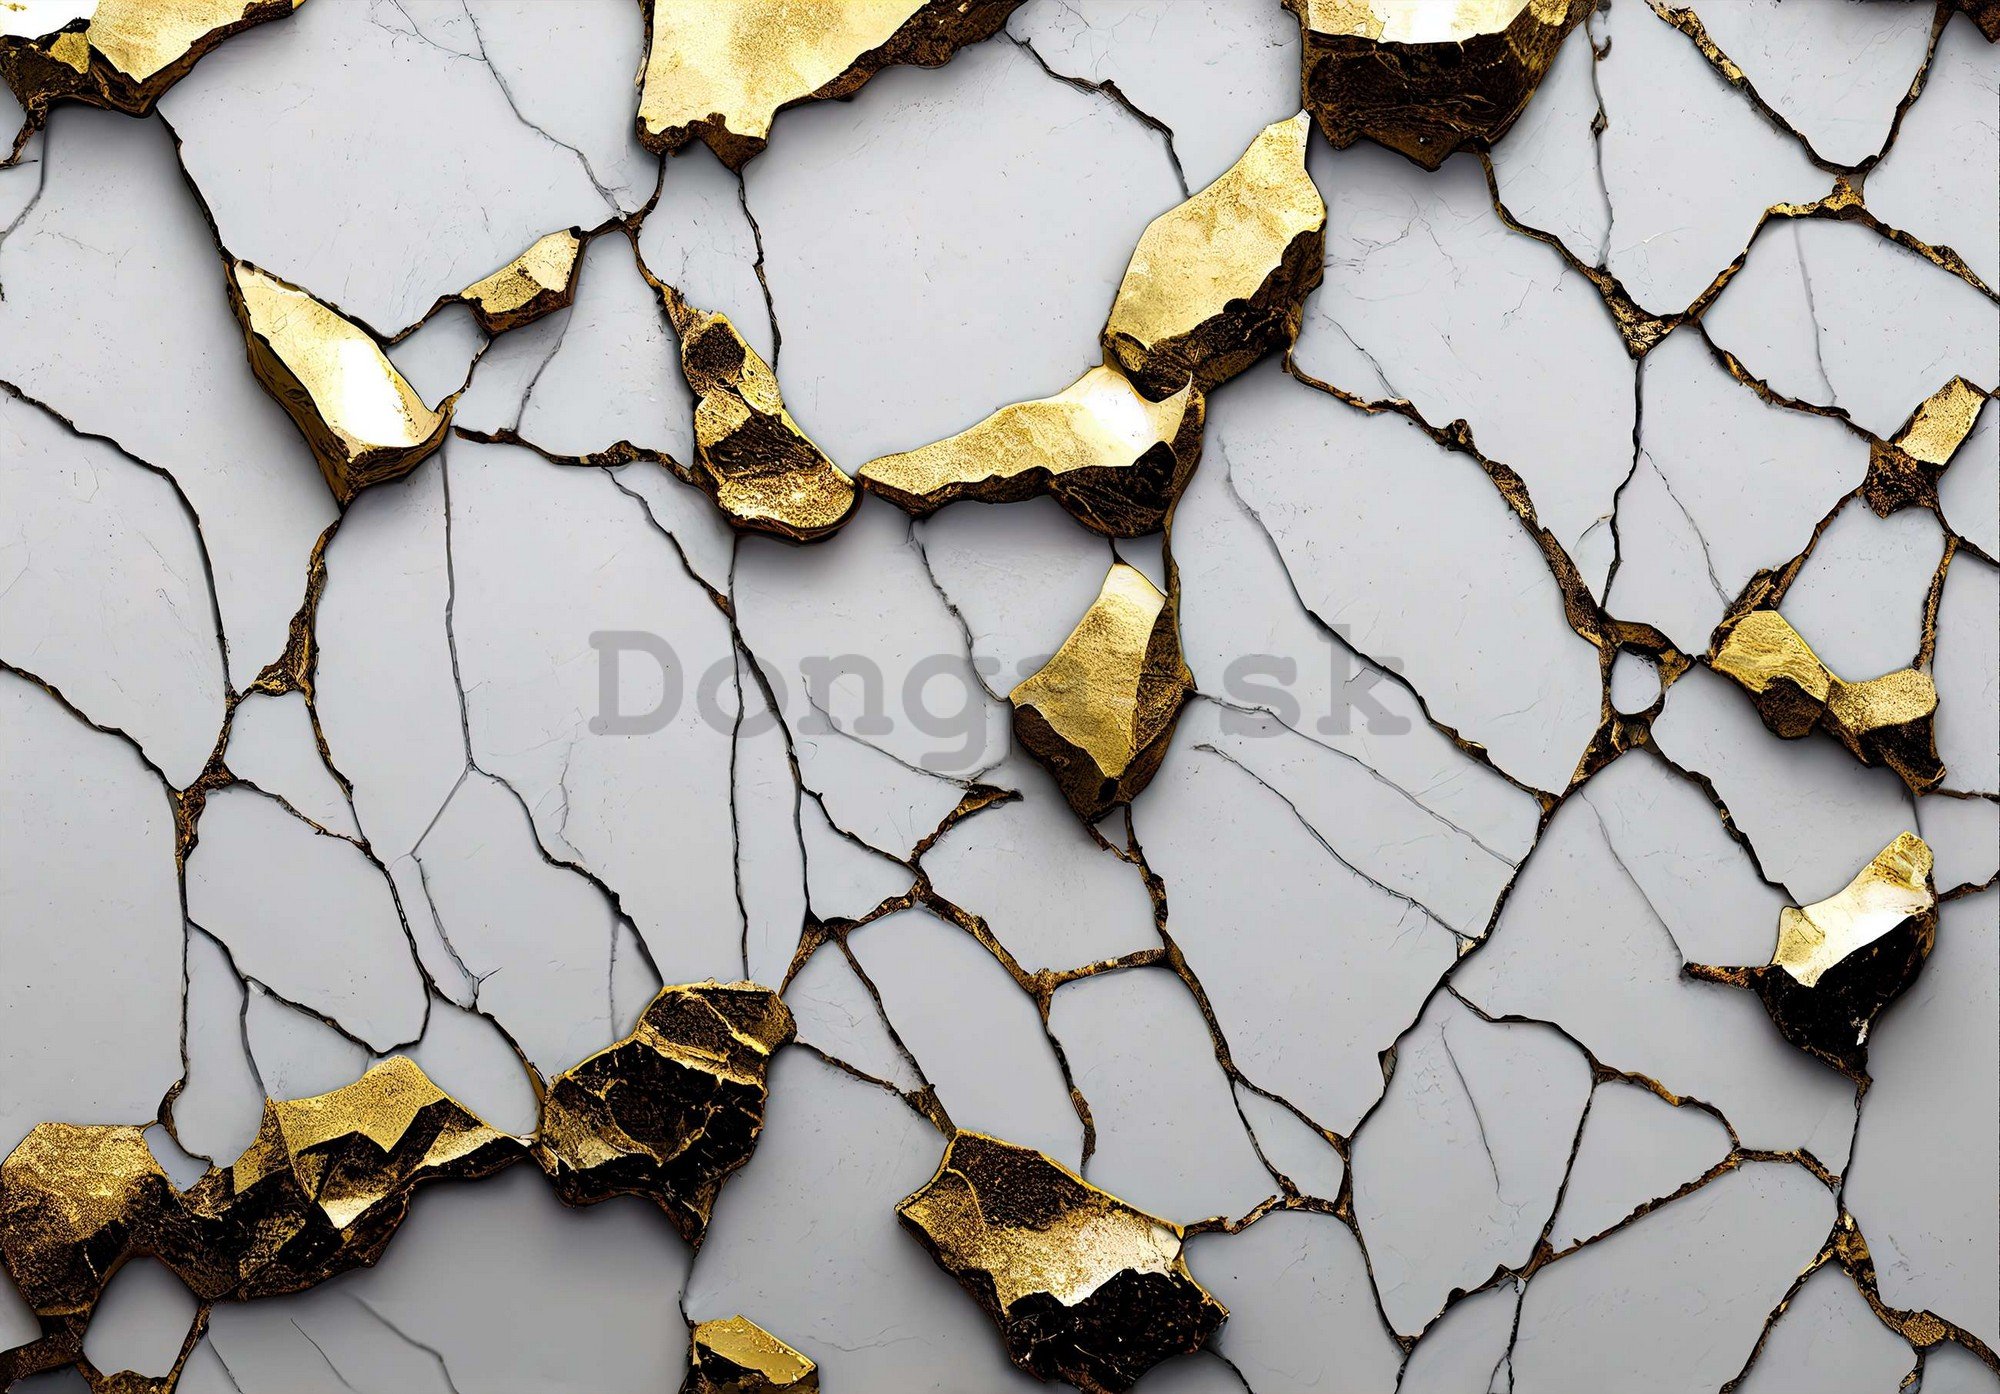 Fototapeta vliesová: Glamour imitace zlatého mramoru s bílou zdí - 254x184 cm